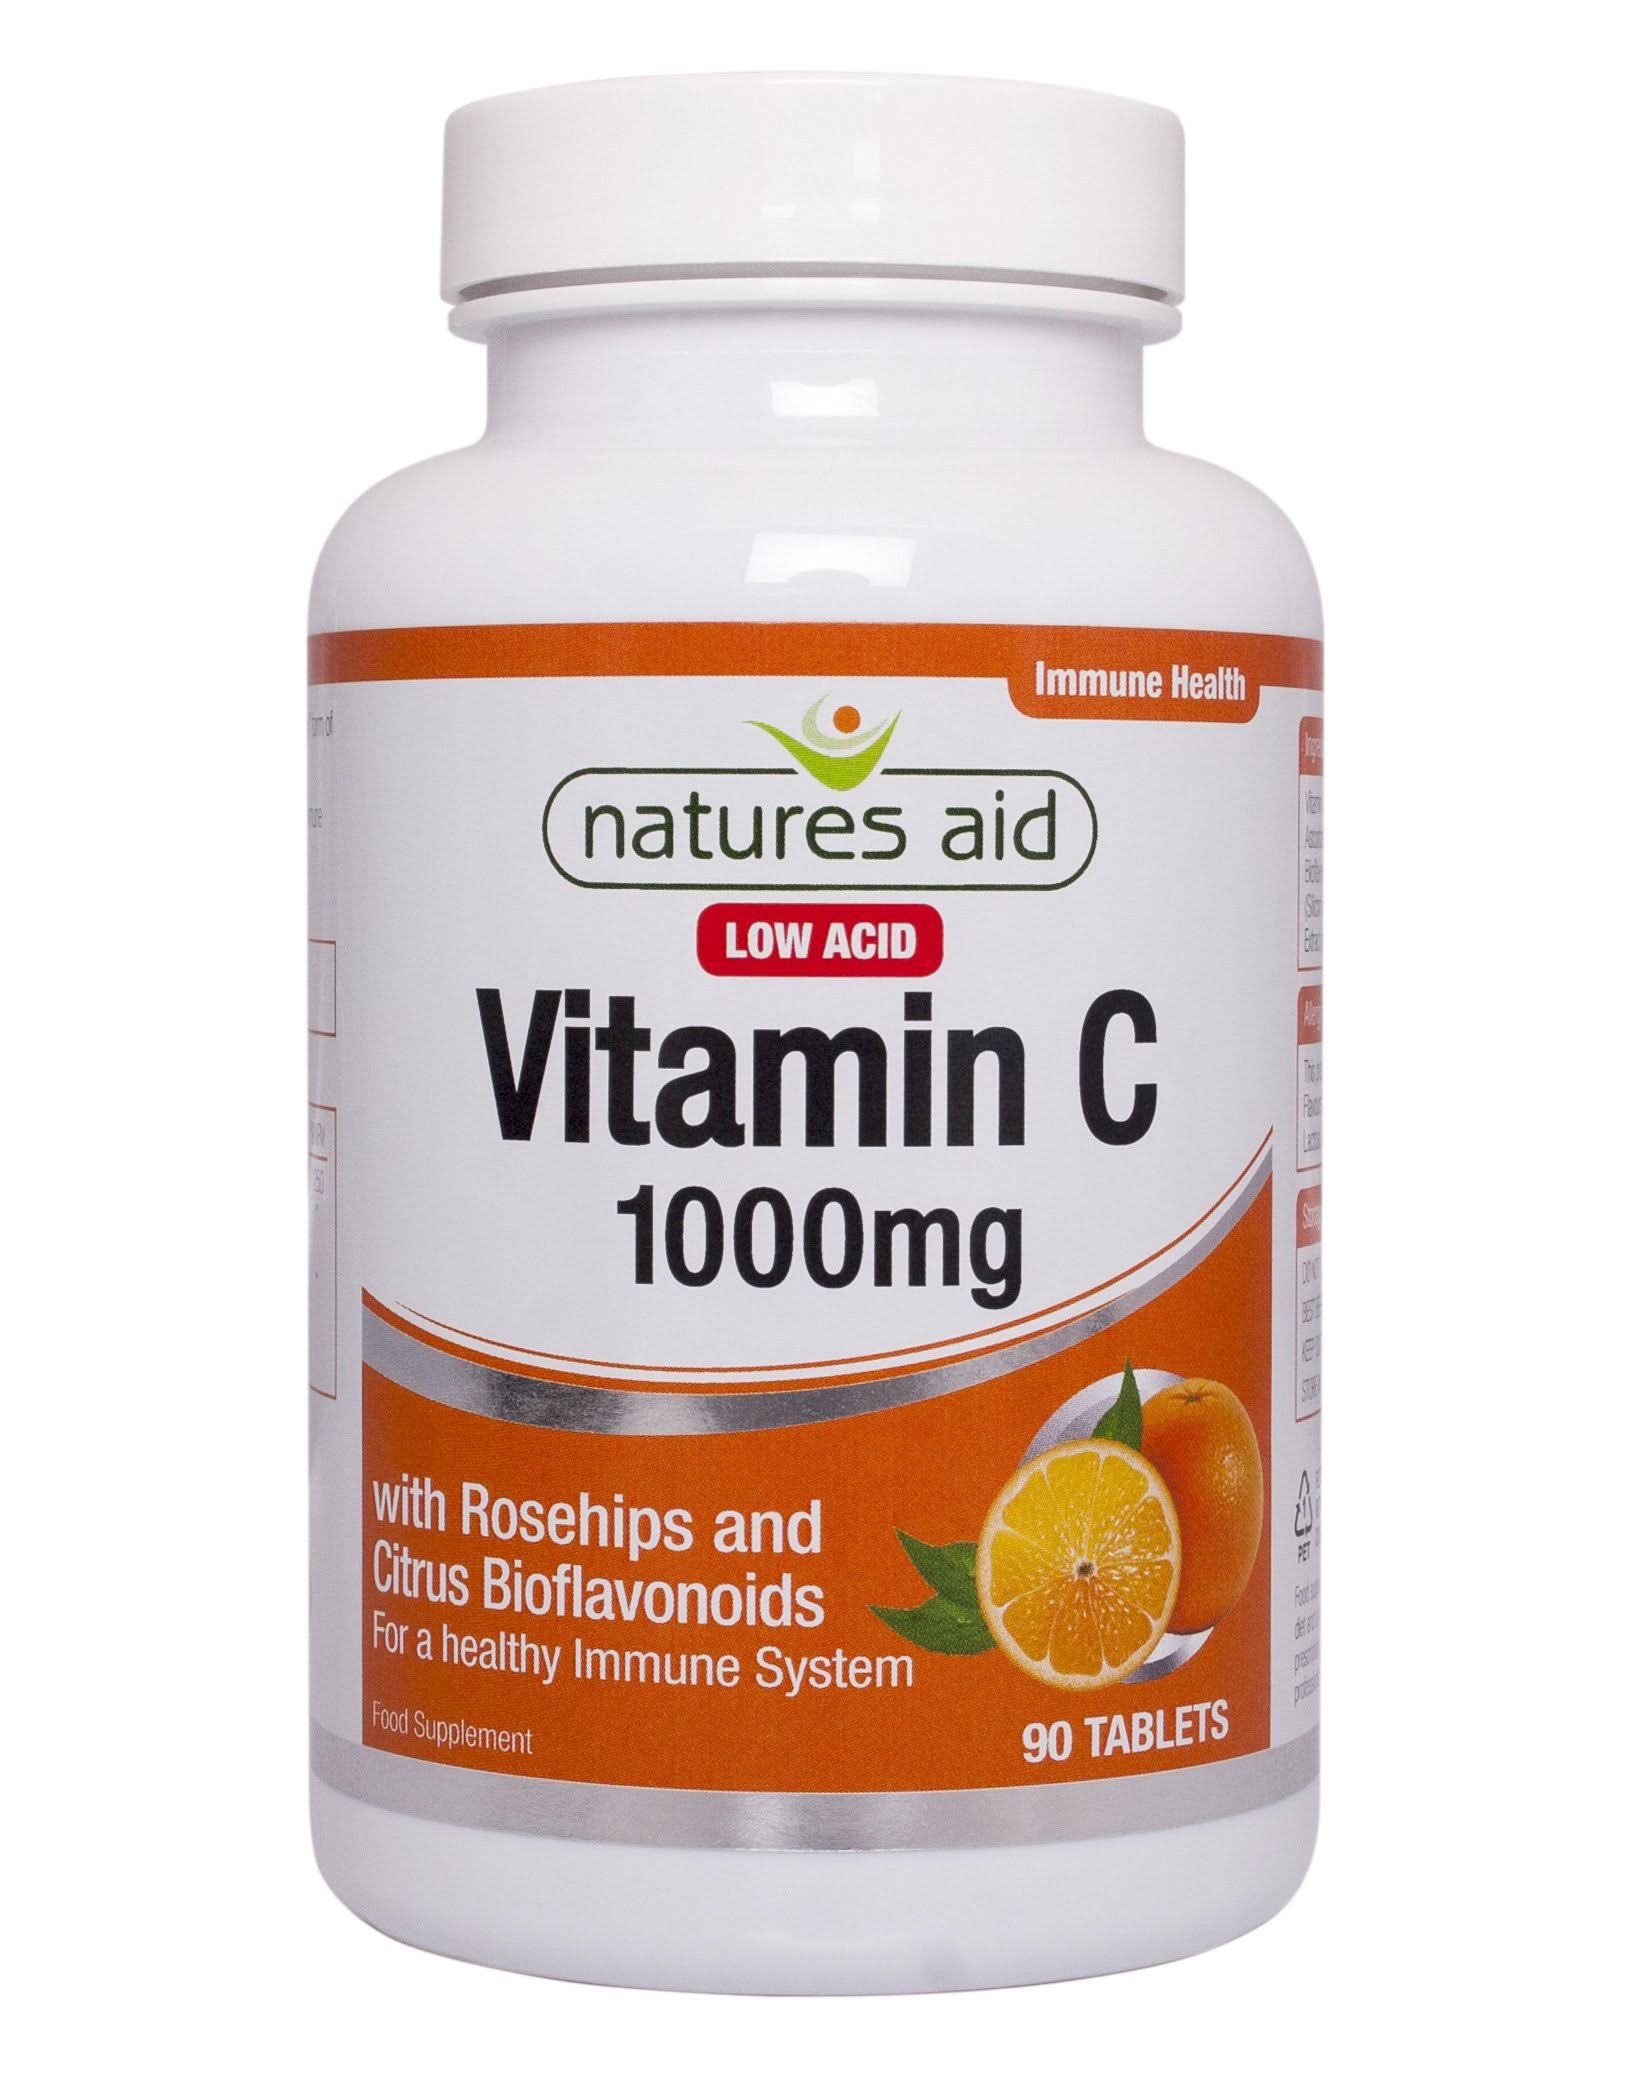 Natures Aid - Vitamin C 1000mg Low Acid 90 Tablets